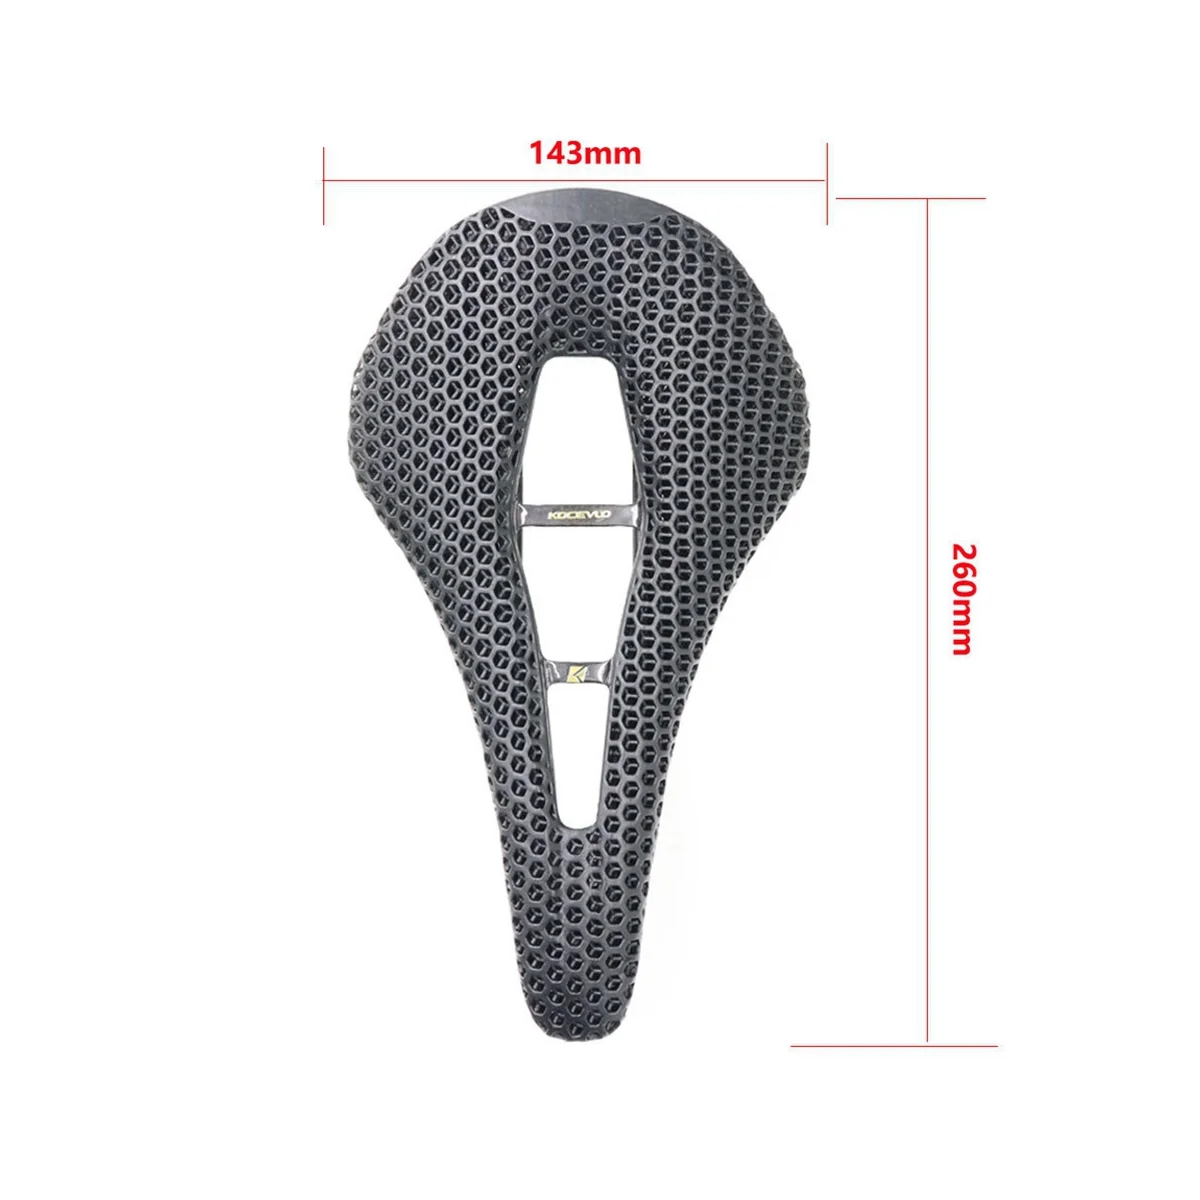 

KOCEVLO 3D Printed Cushion Carbon Fiber Cushion for Mountain Bike Comfortable Riding Cushion Riding Equipment